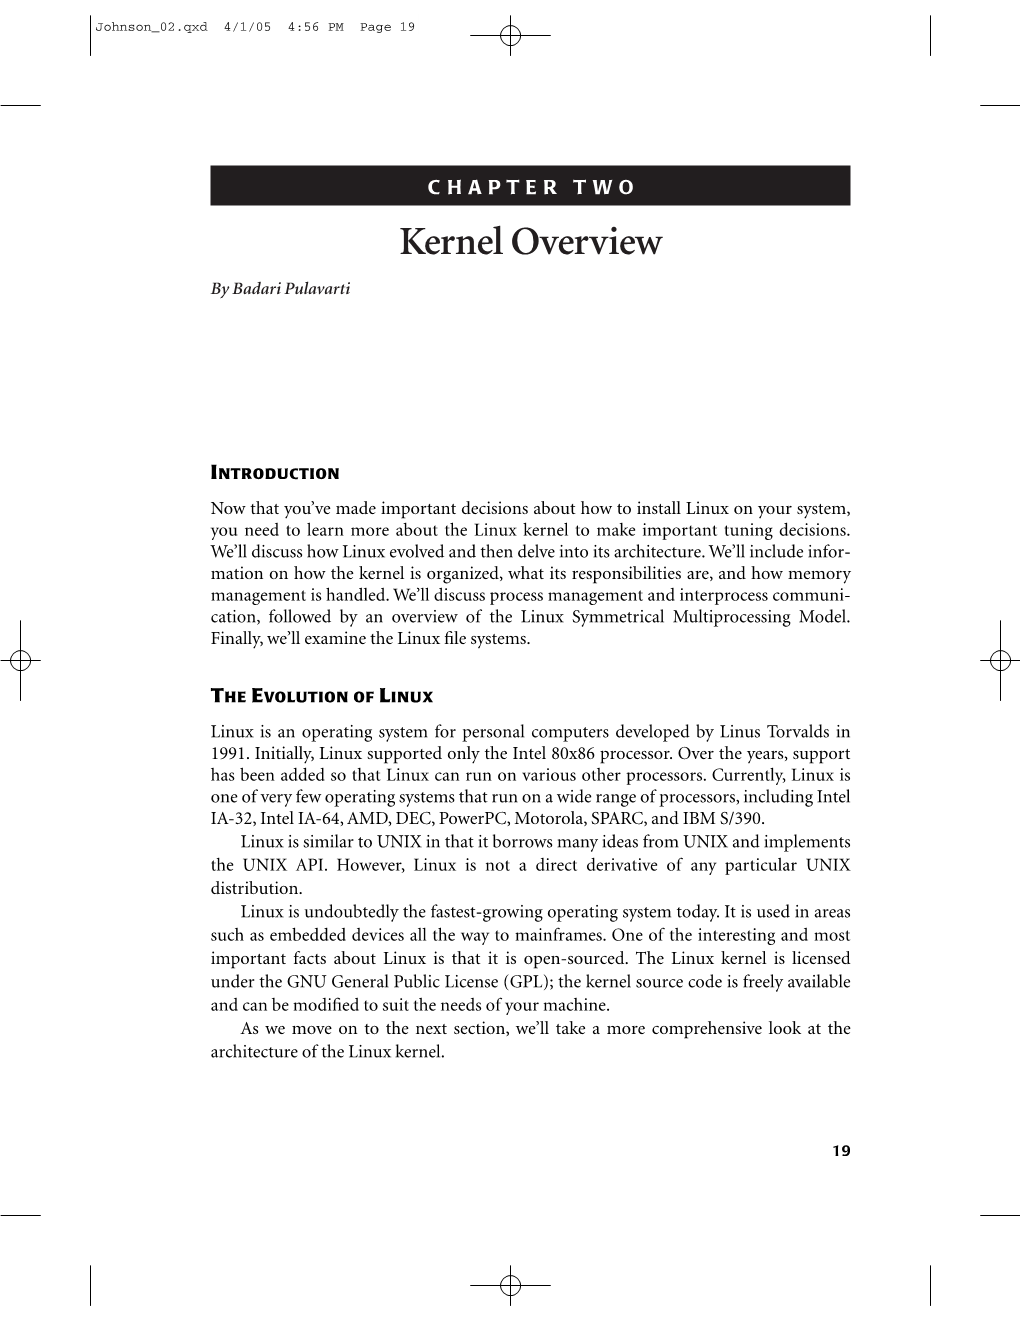 Kernel Overview by Badari Pulavarti